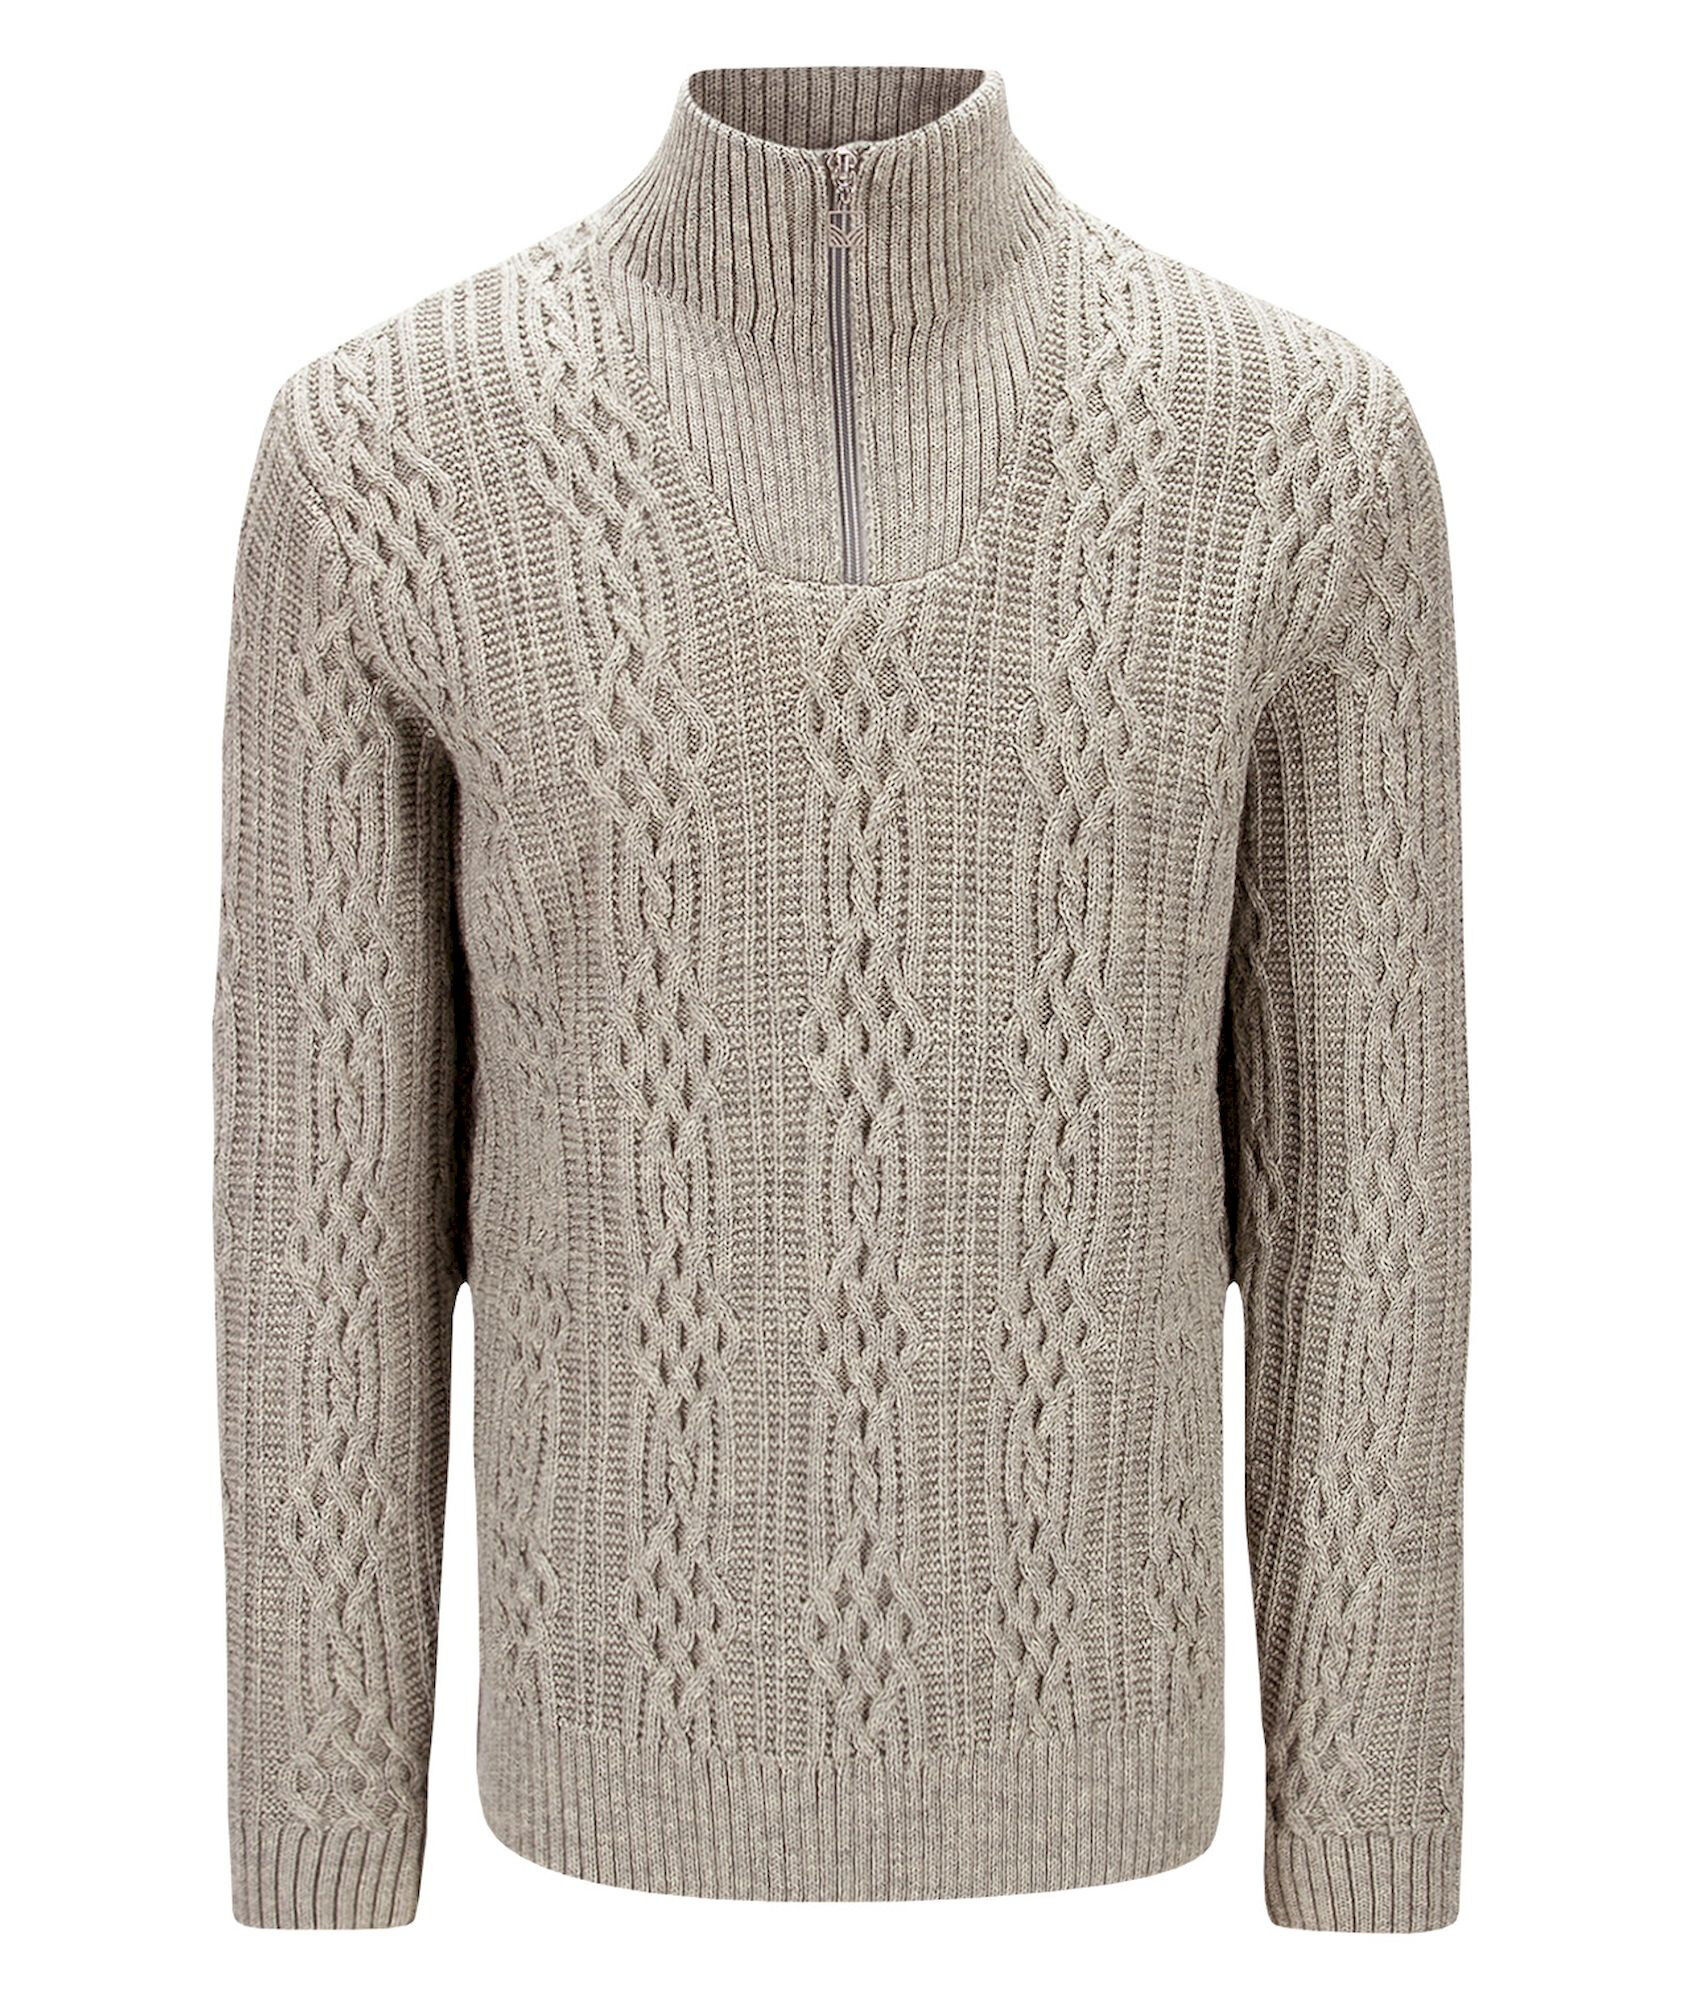 Dale of Norway Hoven Sweater - Pullover in lana merino - Uomo | Hardloop